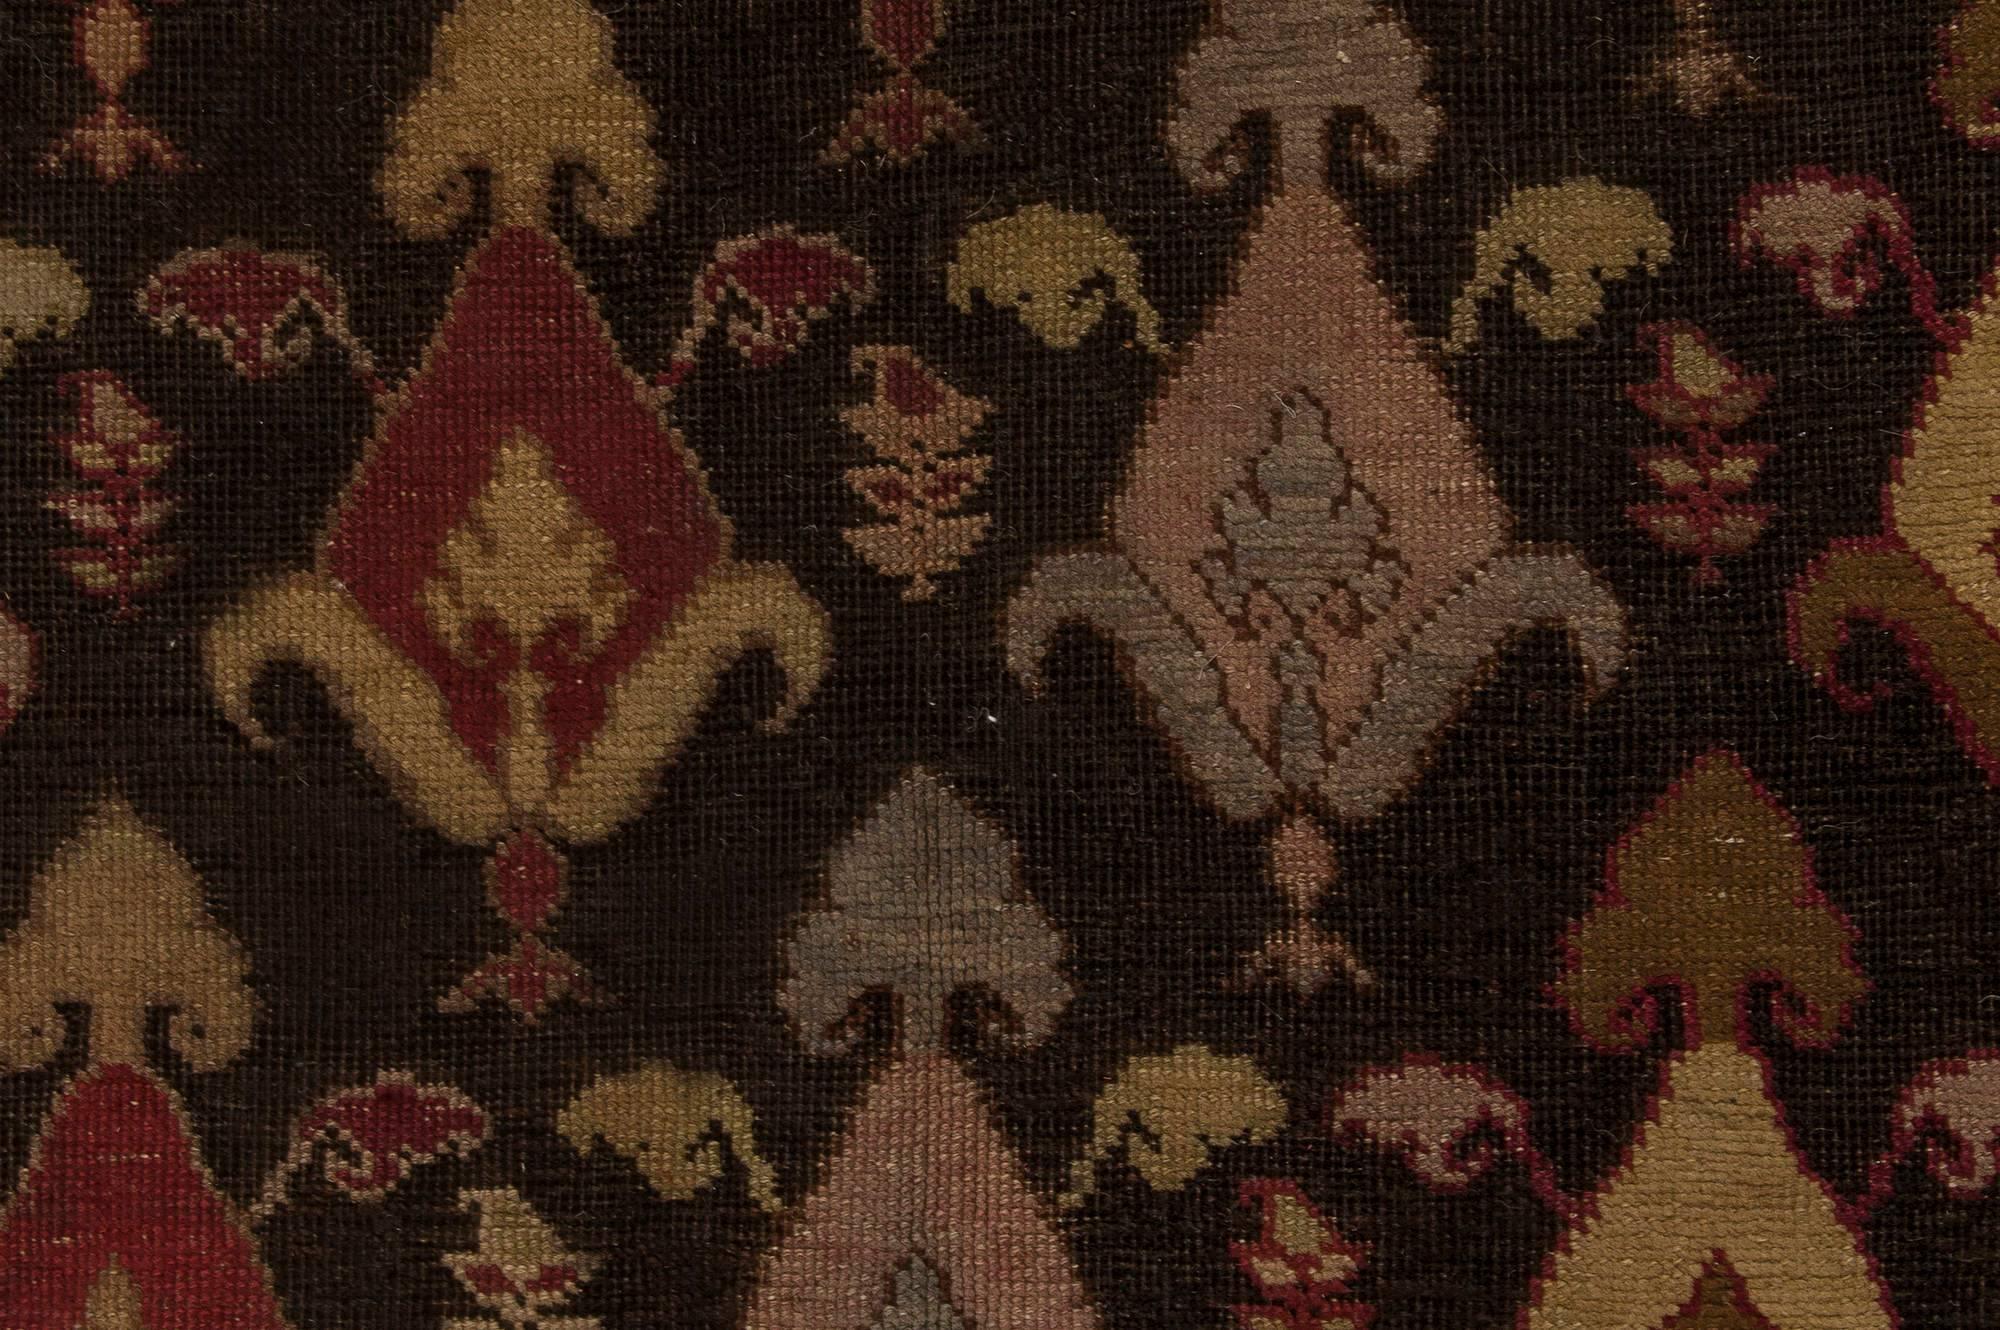 19th century Russian Karabagh handmade wool rug
Size: 6'6